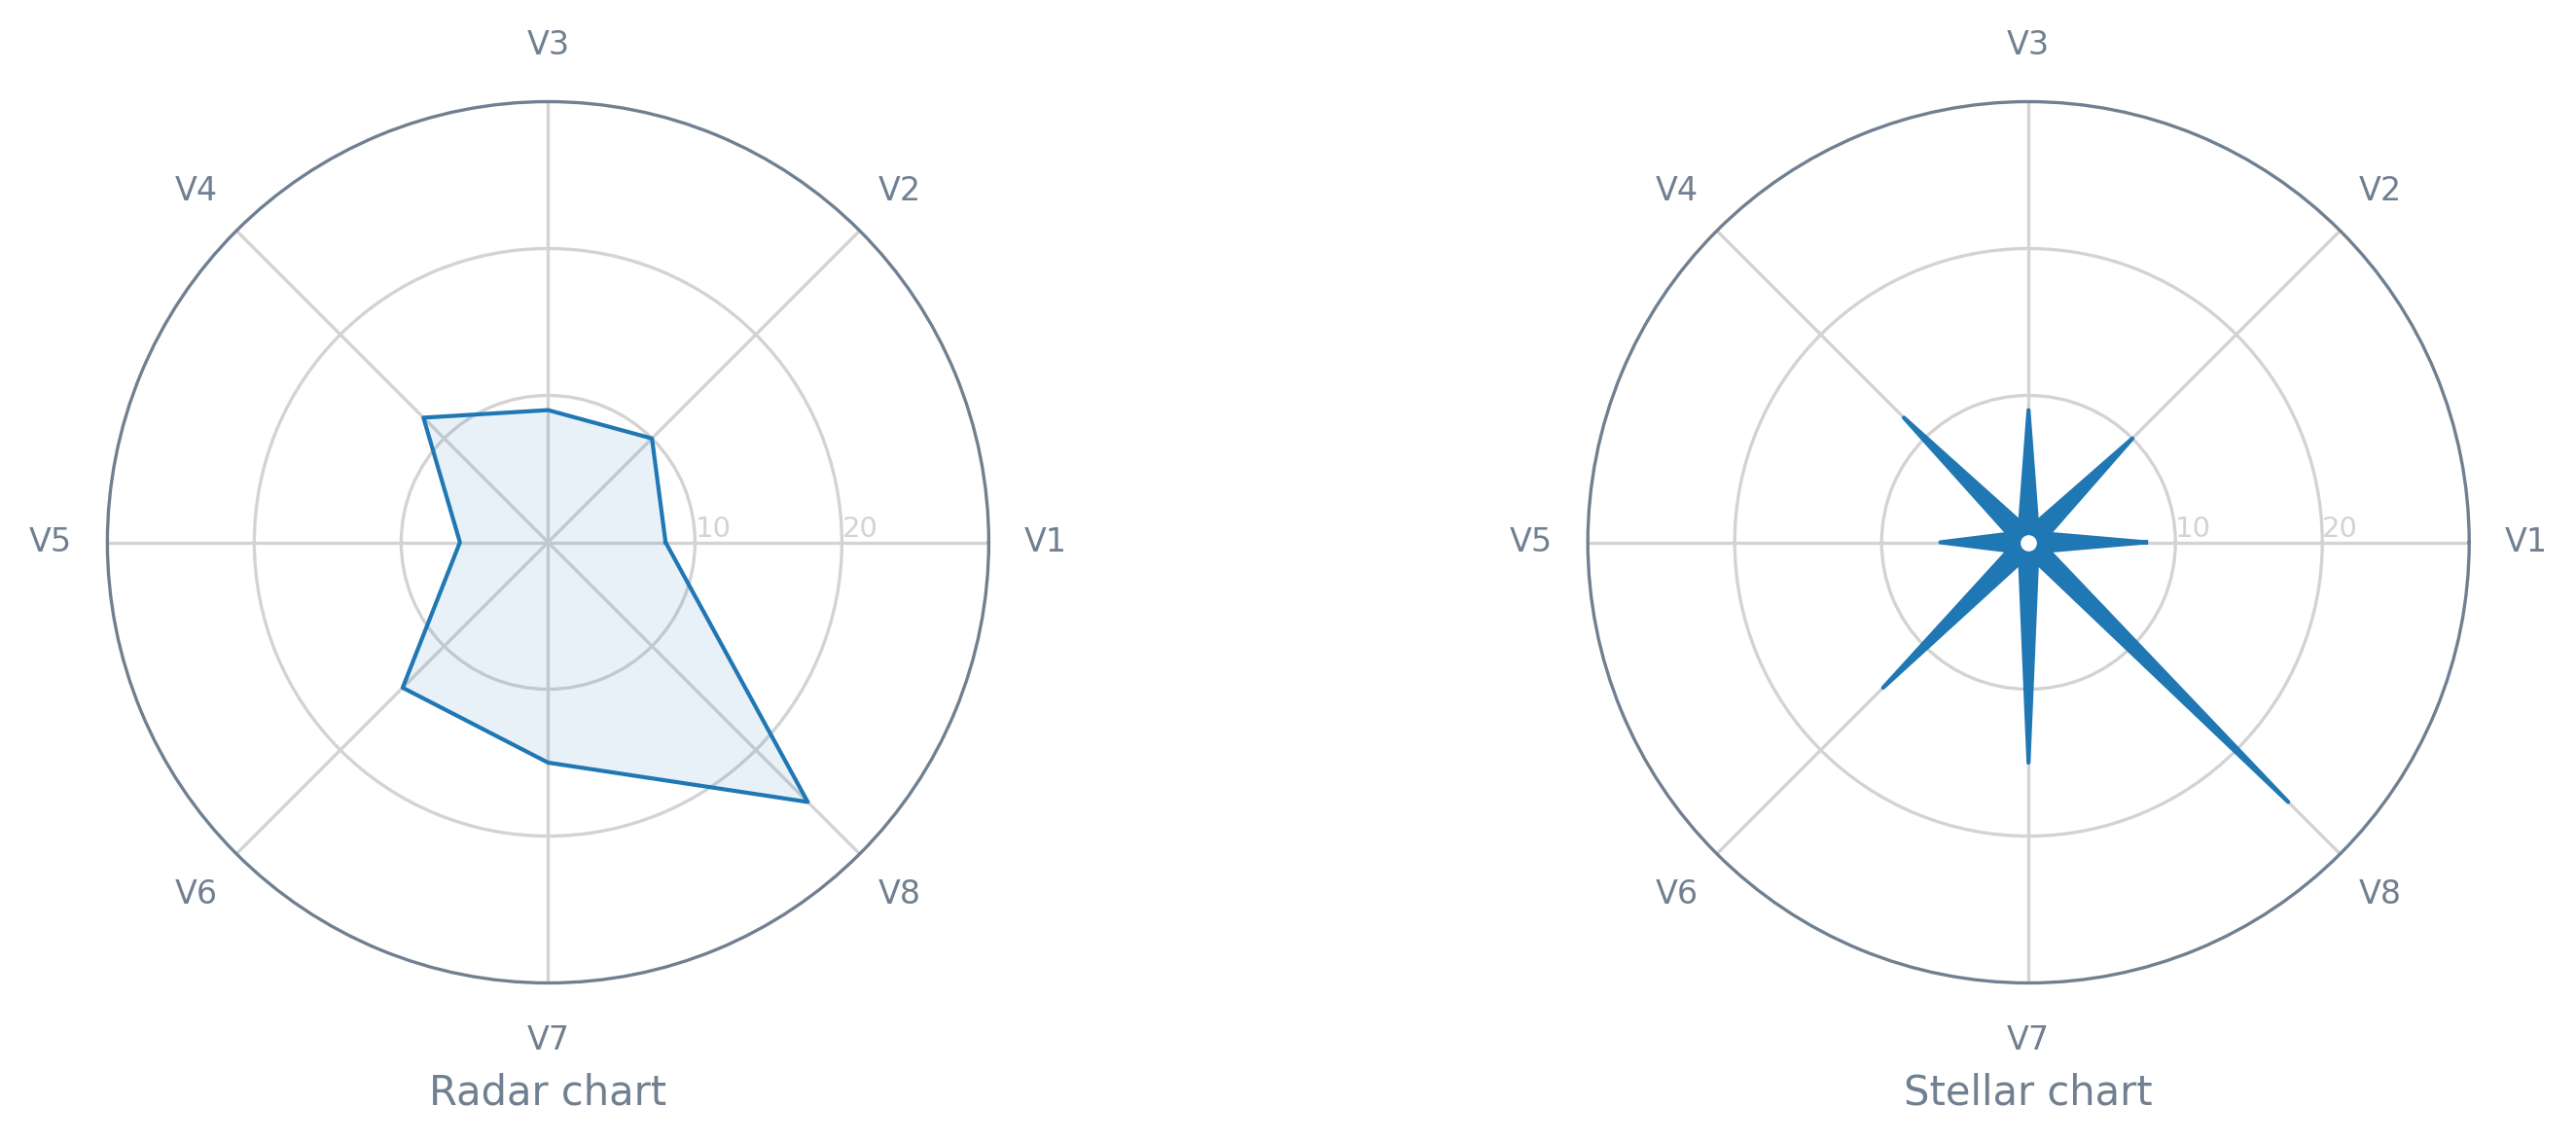 Comparison of a radar chart and a stellar chart